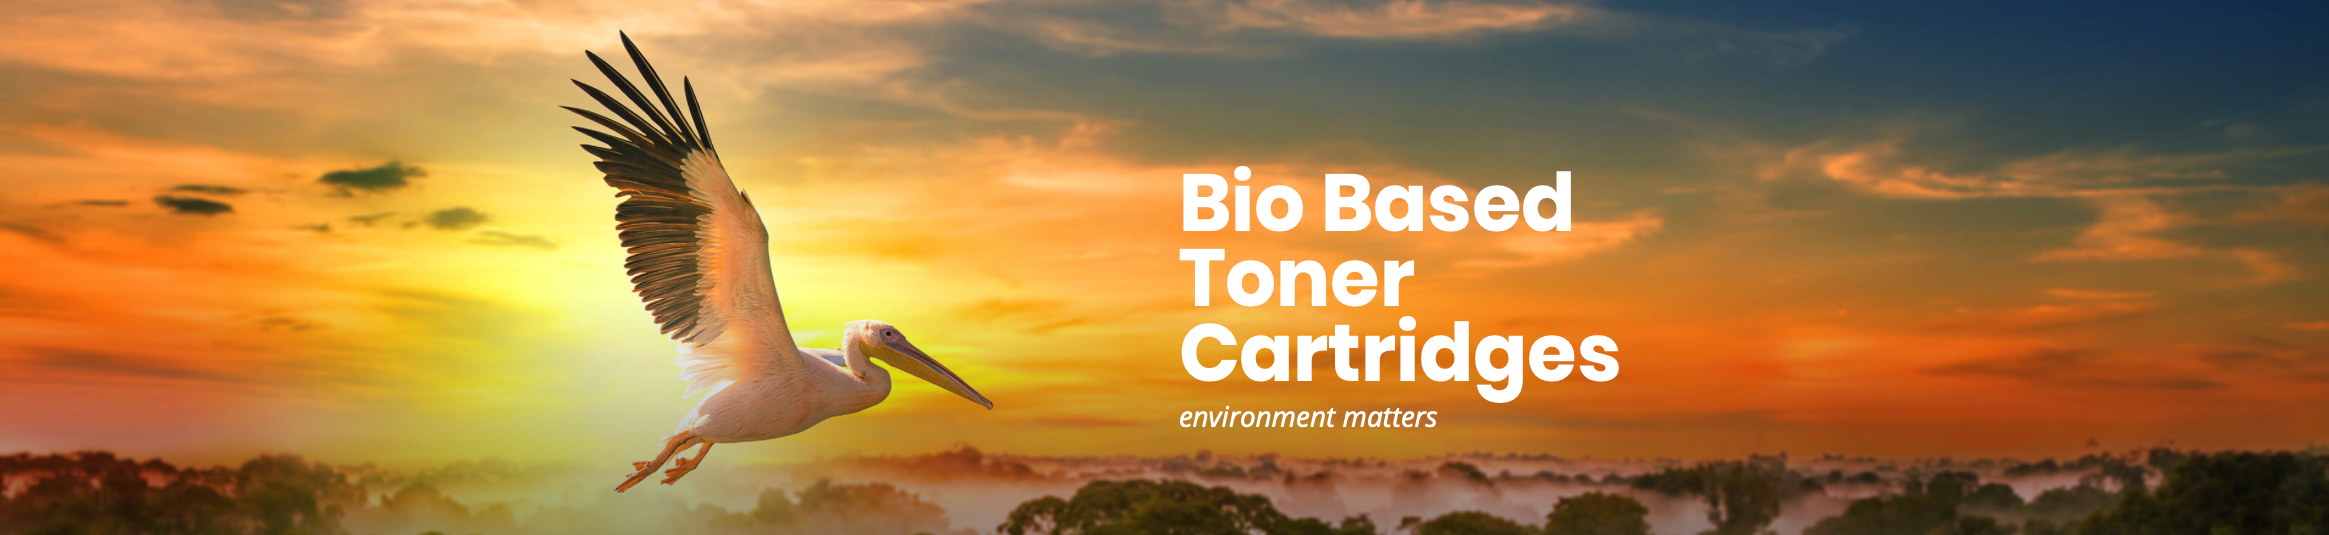 WHOffice - Cartouches de toner Bio Based Toner Cartridges